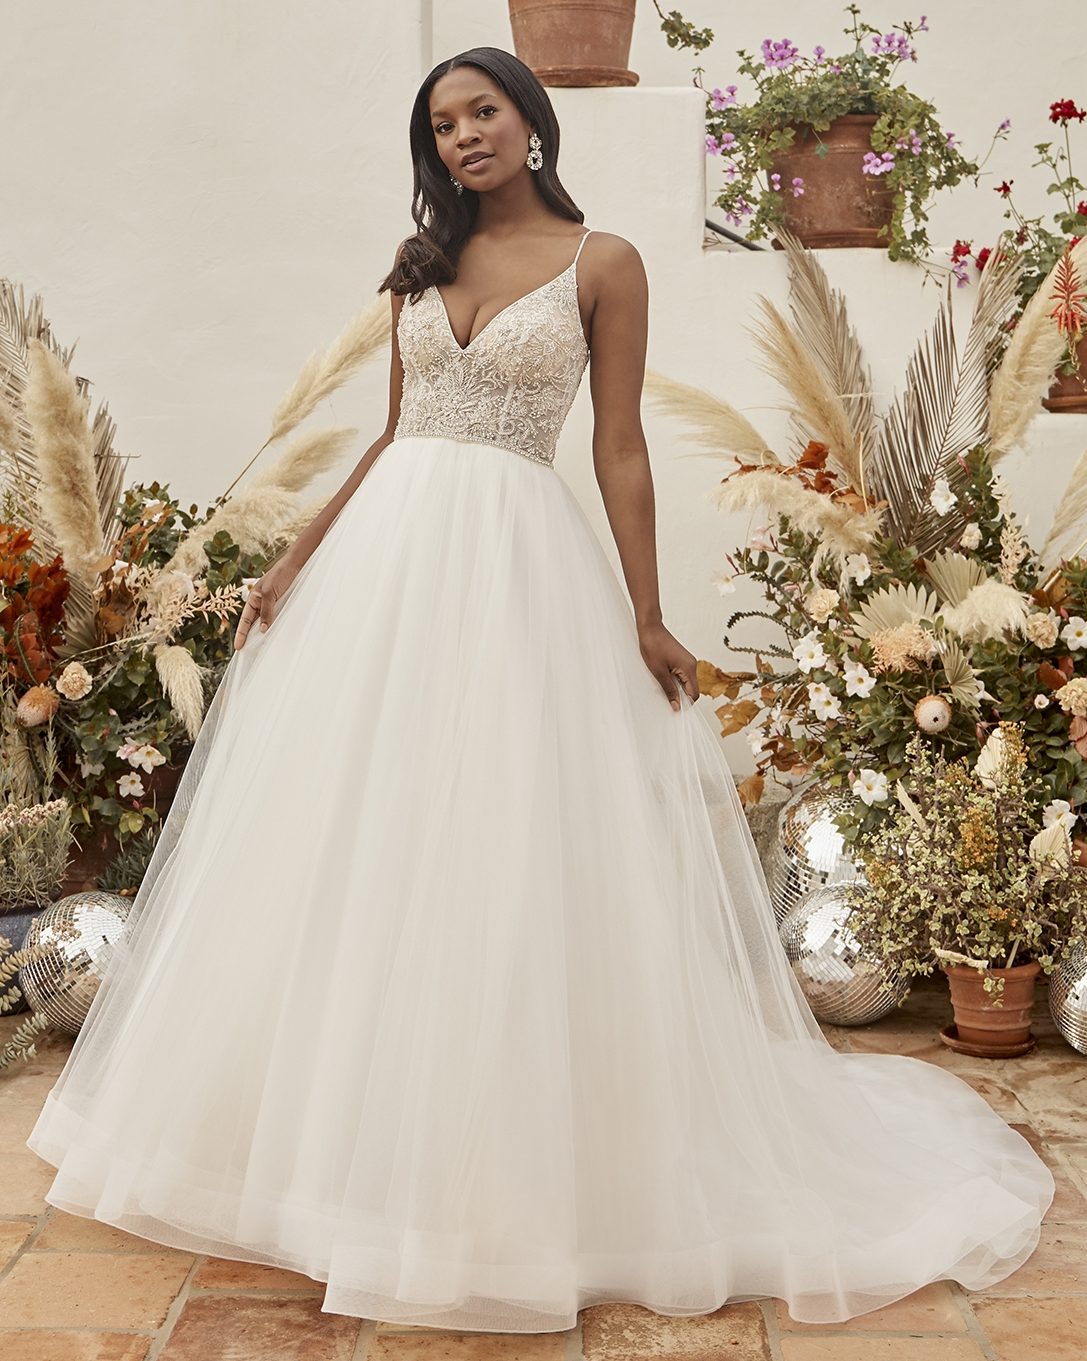 Beautiful sleeveless ballgown wedding dress with beaded bodice